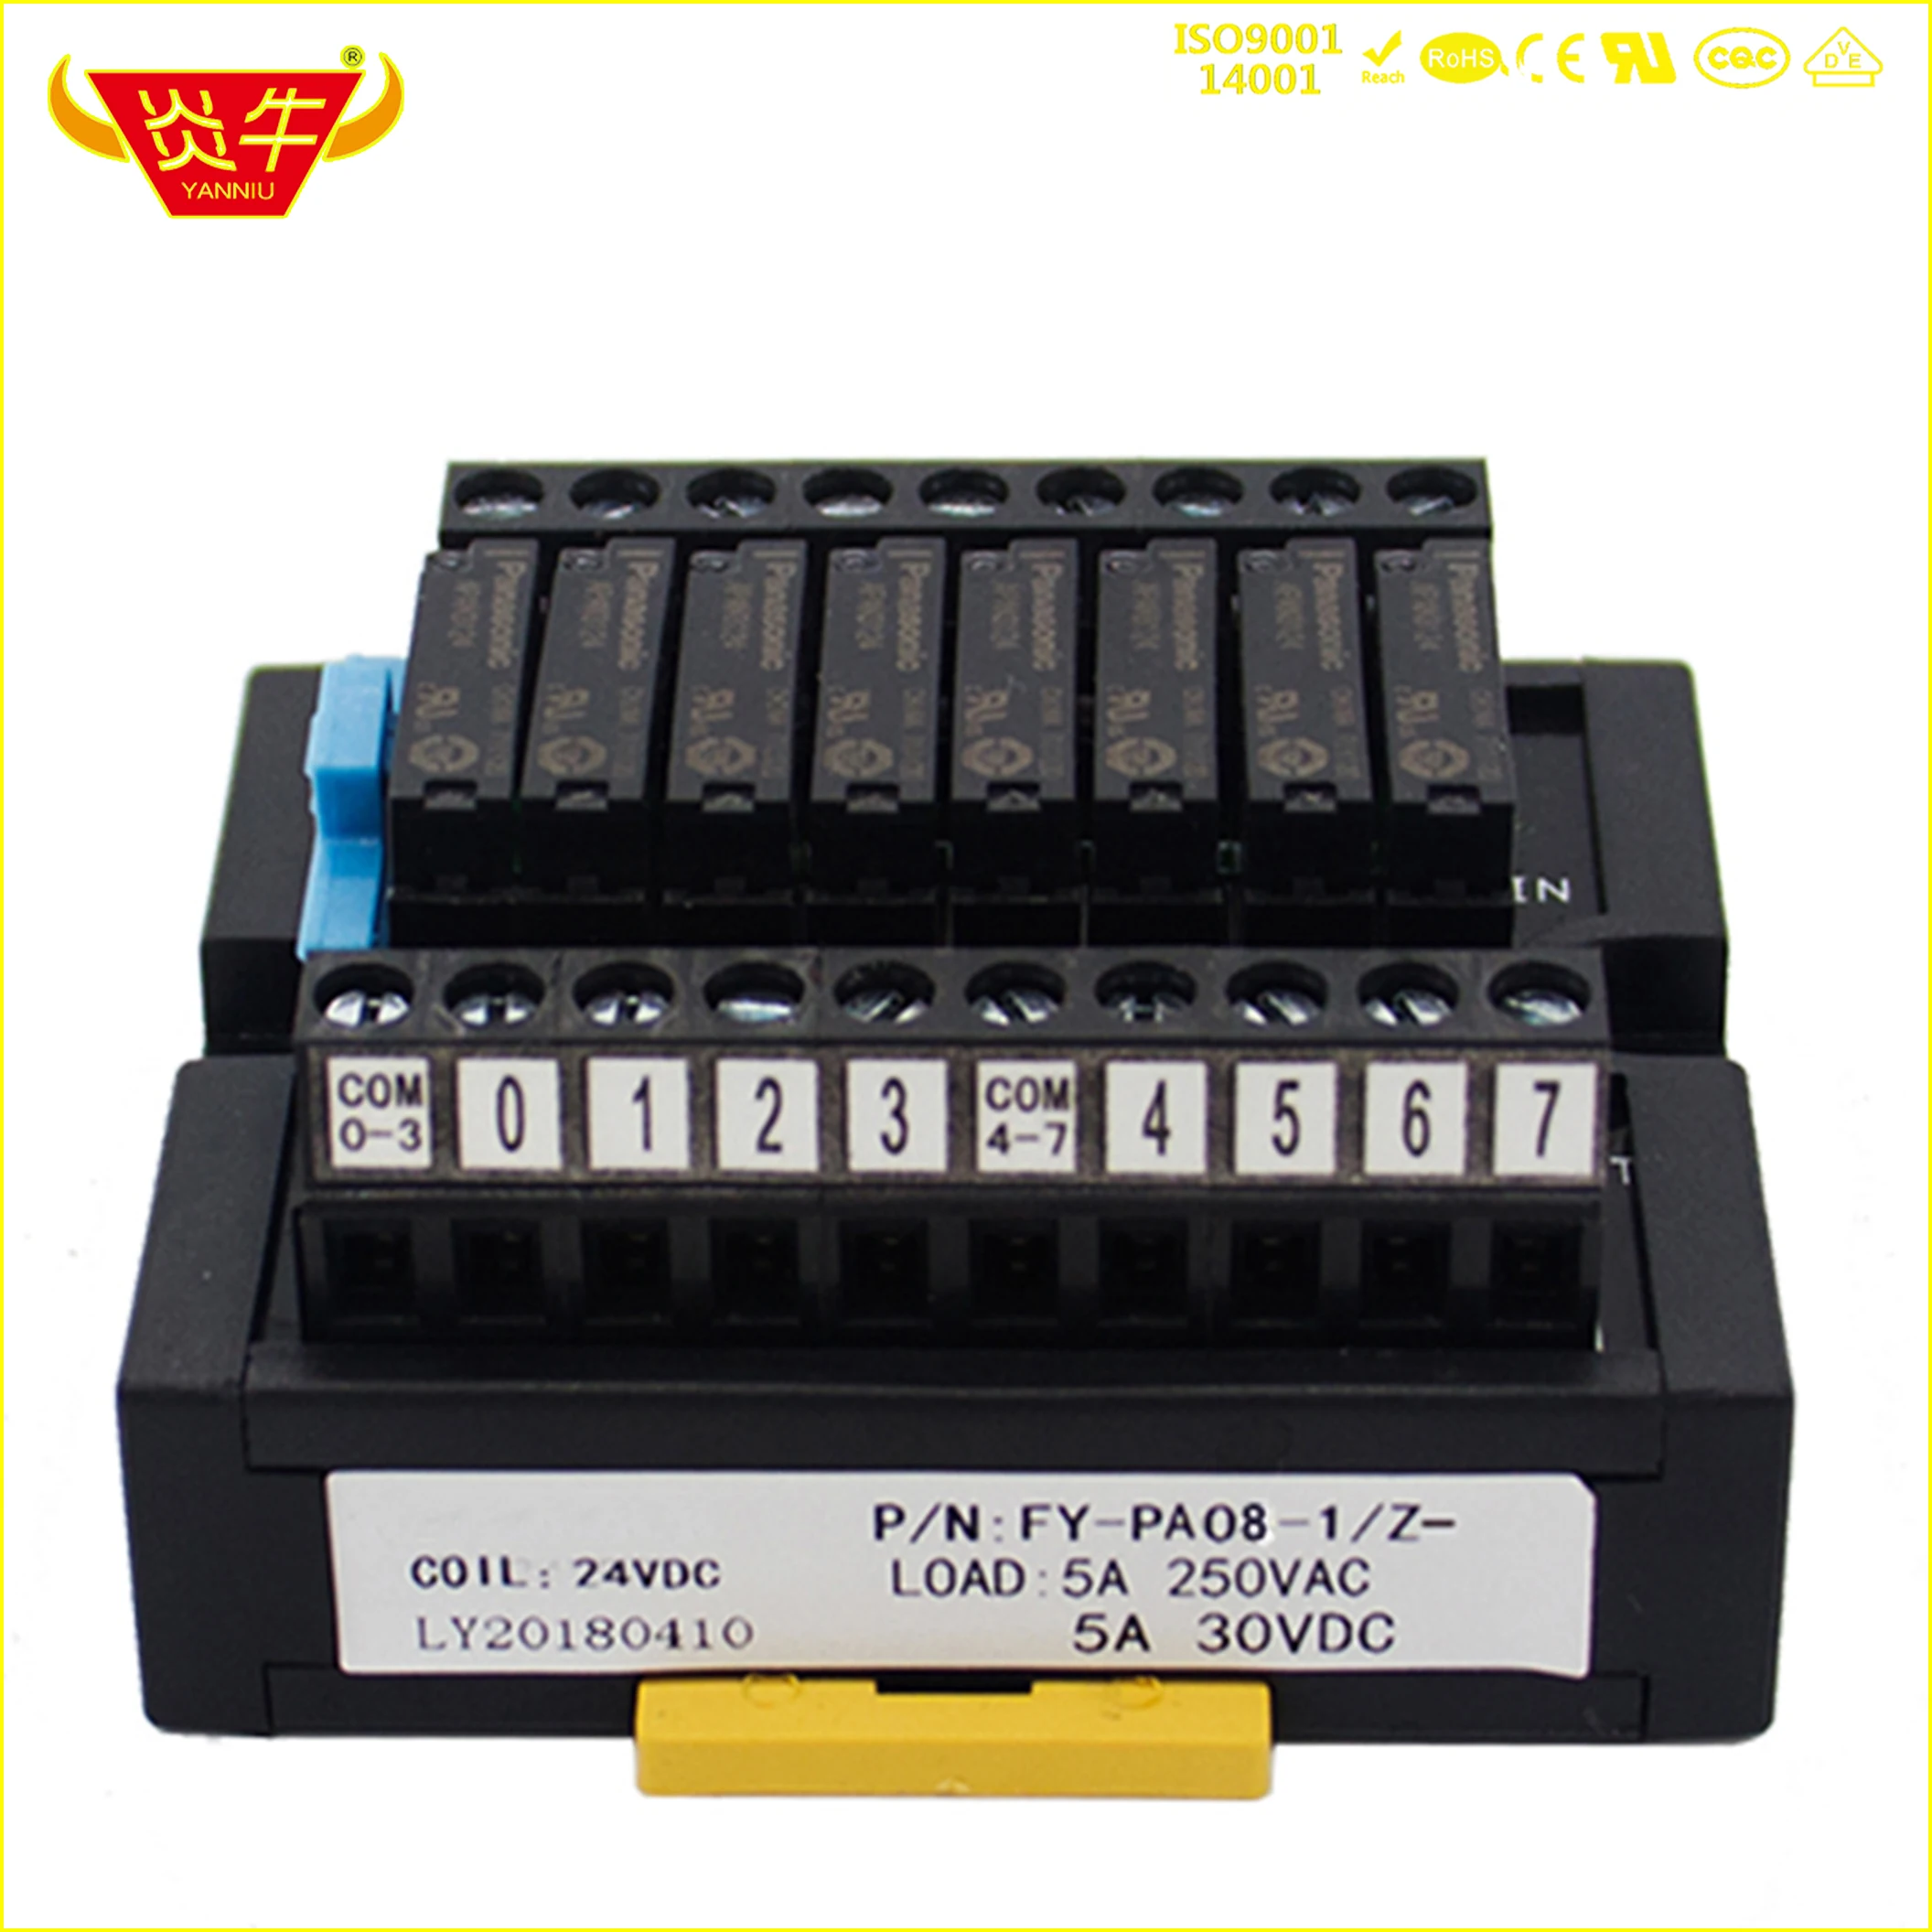 Panasonic APAN3105 APAN3112 APAN3124  Slim relay   8 channel DIN Mounted relay module  Industrial control  for PLC  YANNIU